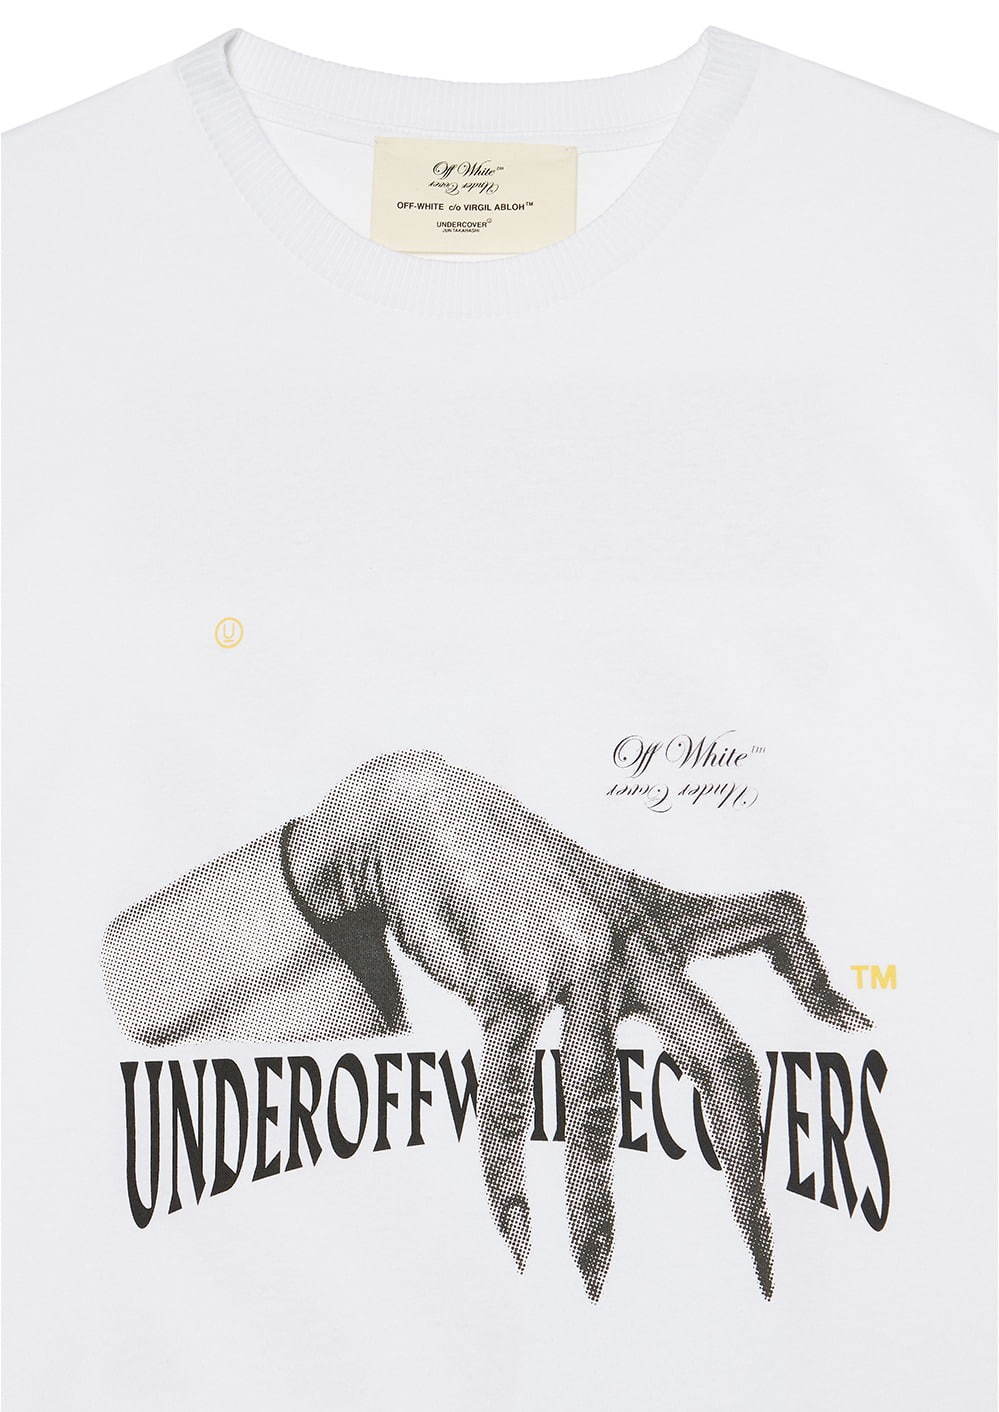 off-white c/o undercover Tシャツ